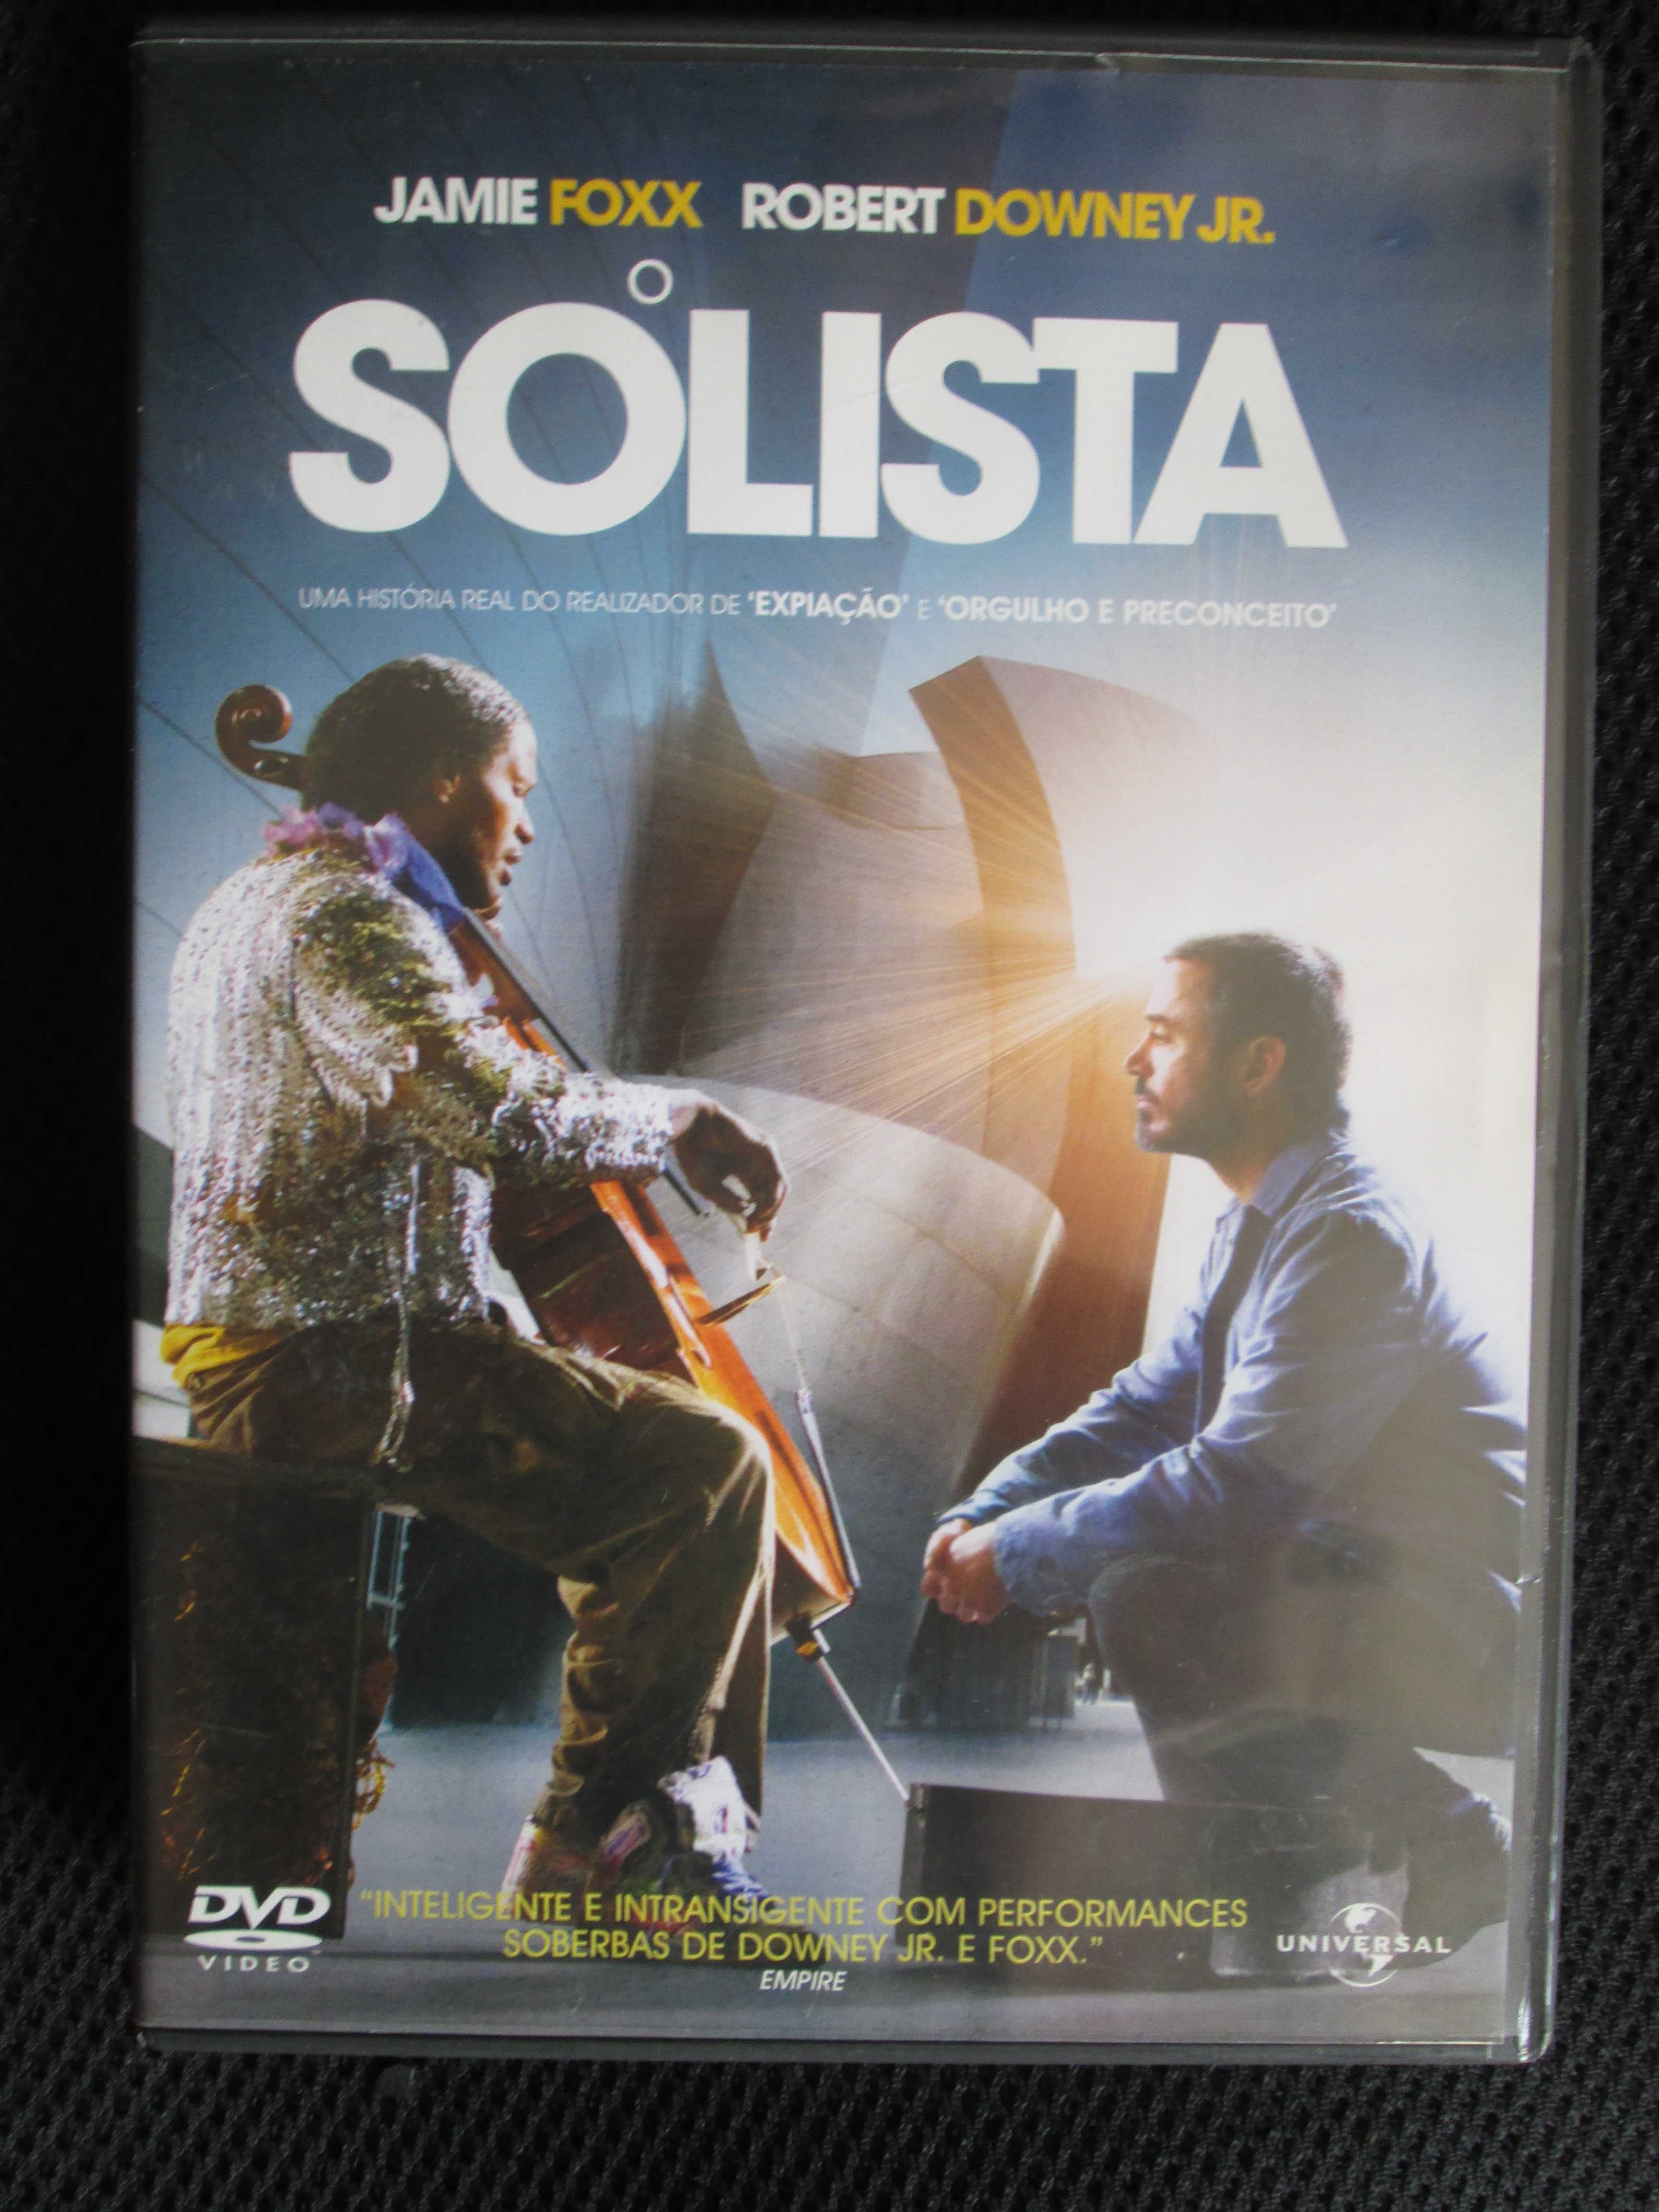 O SOLISTA, de Joe Wright, com Robert Downey Jr., Jamie Foxx